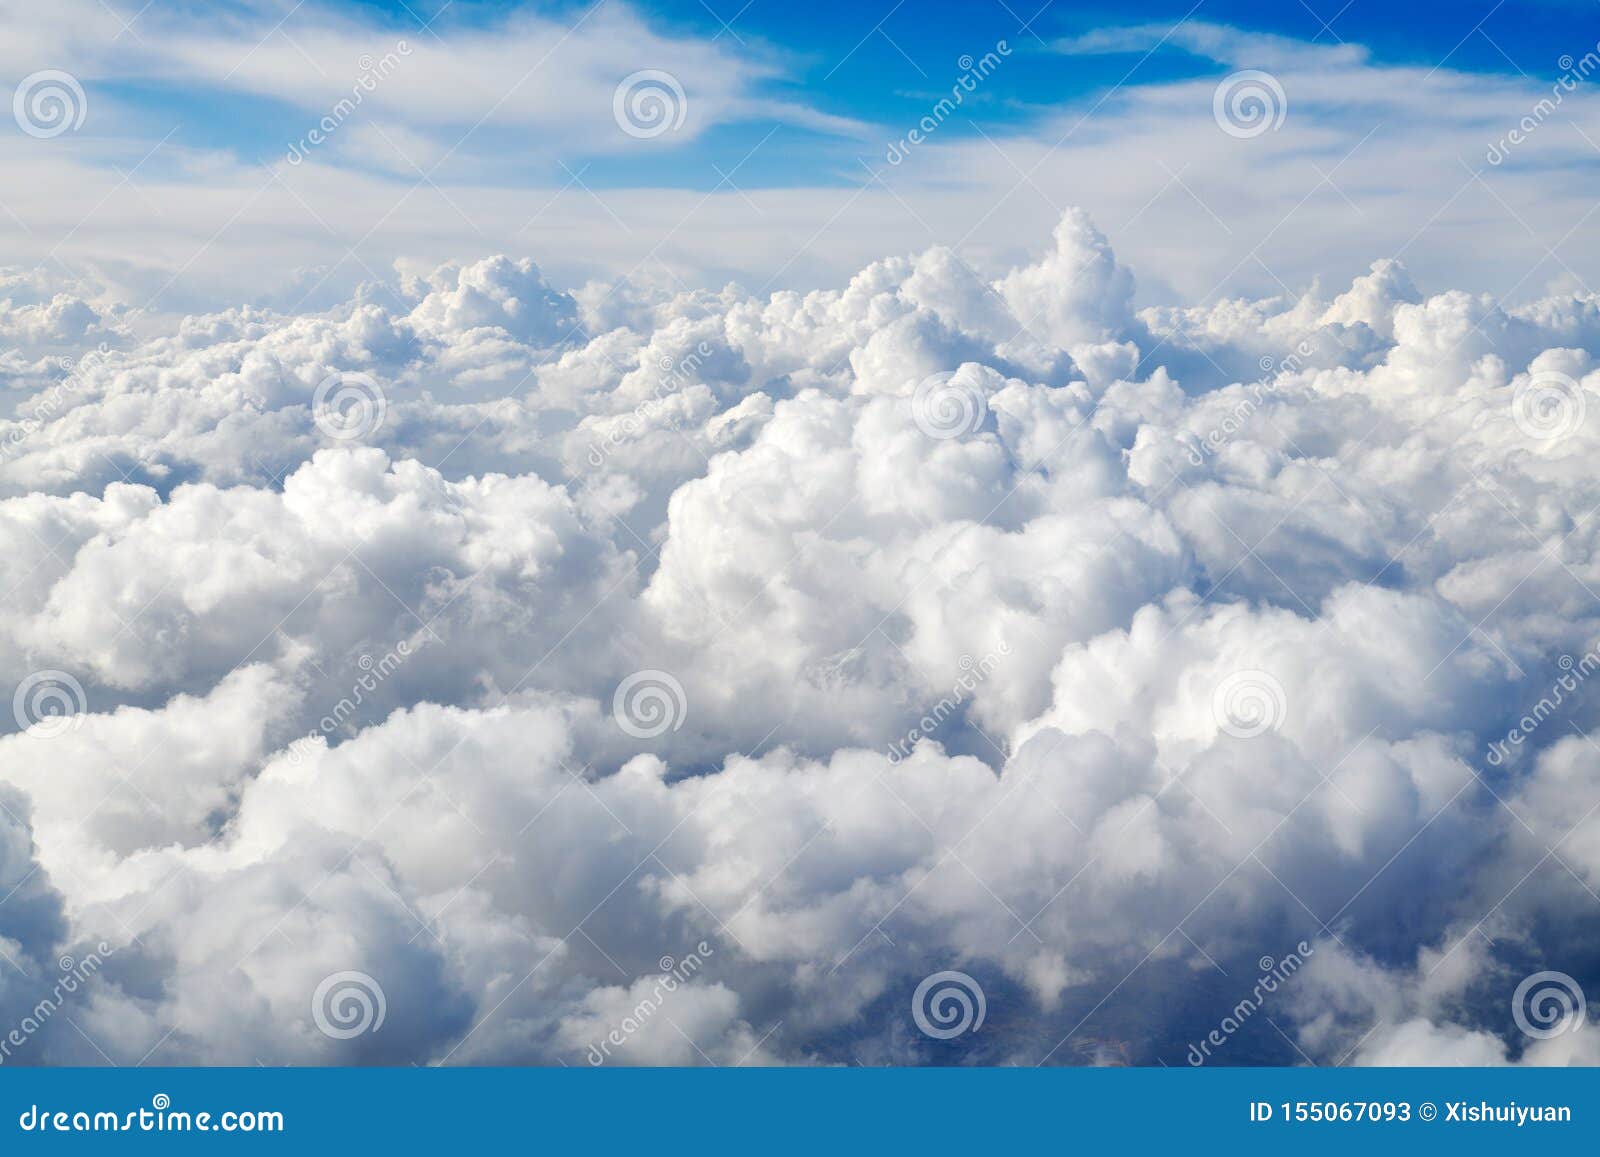 ocean of clouds stock image. scenes - 155067093